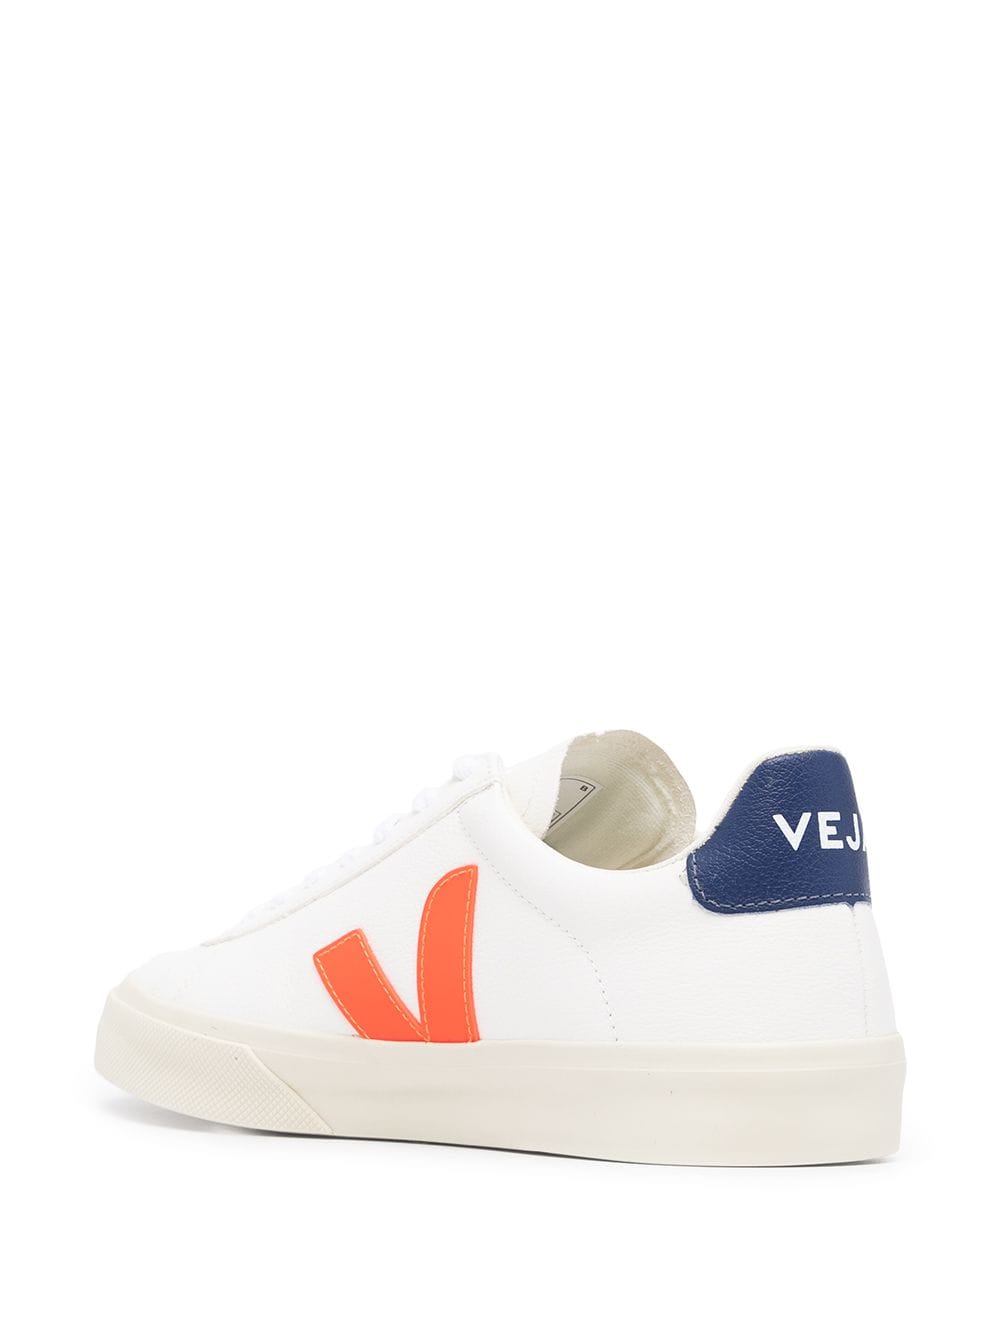 VEJA Campo lace-up sneakers White/Orange - MAISONDEFASHION.COM